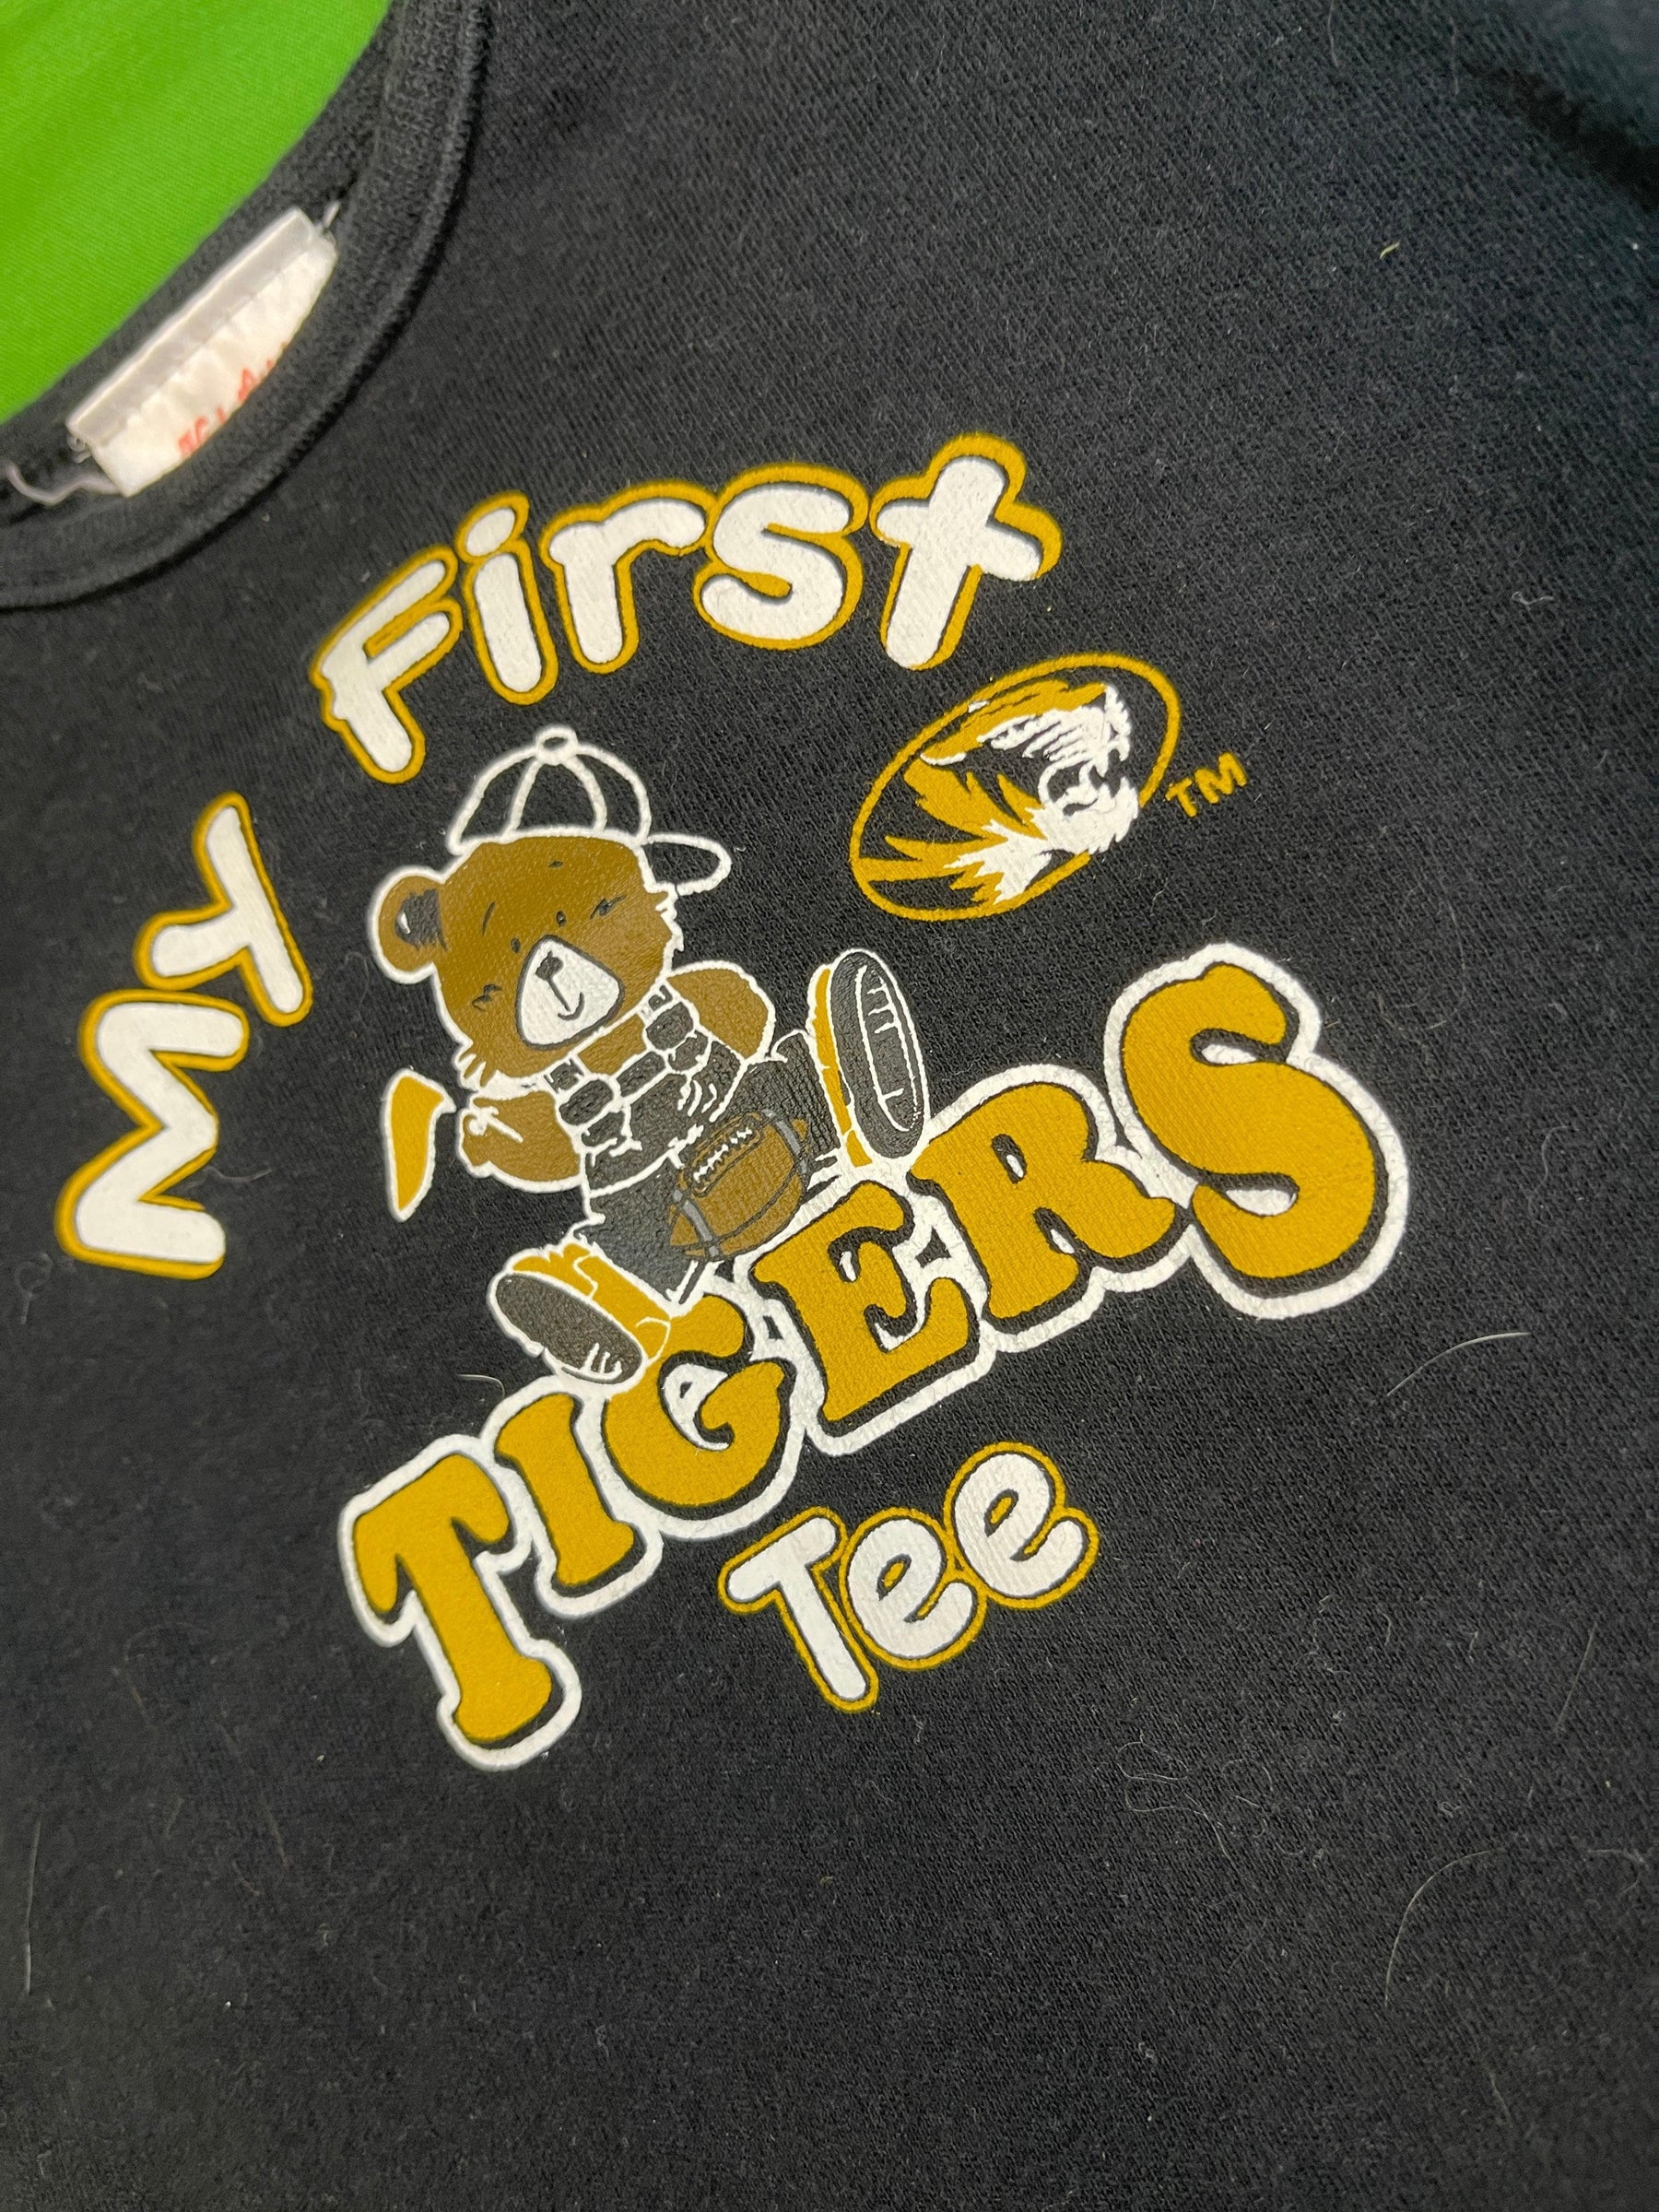 NCAA Missouri Tigers Black T-Shirt 3-6 months